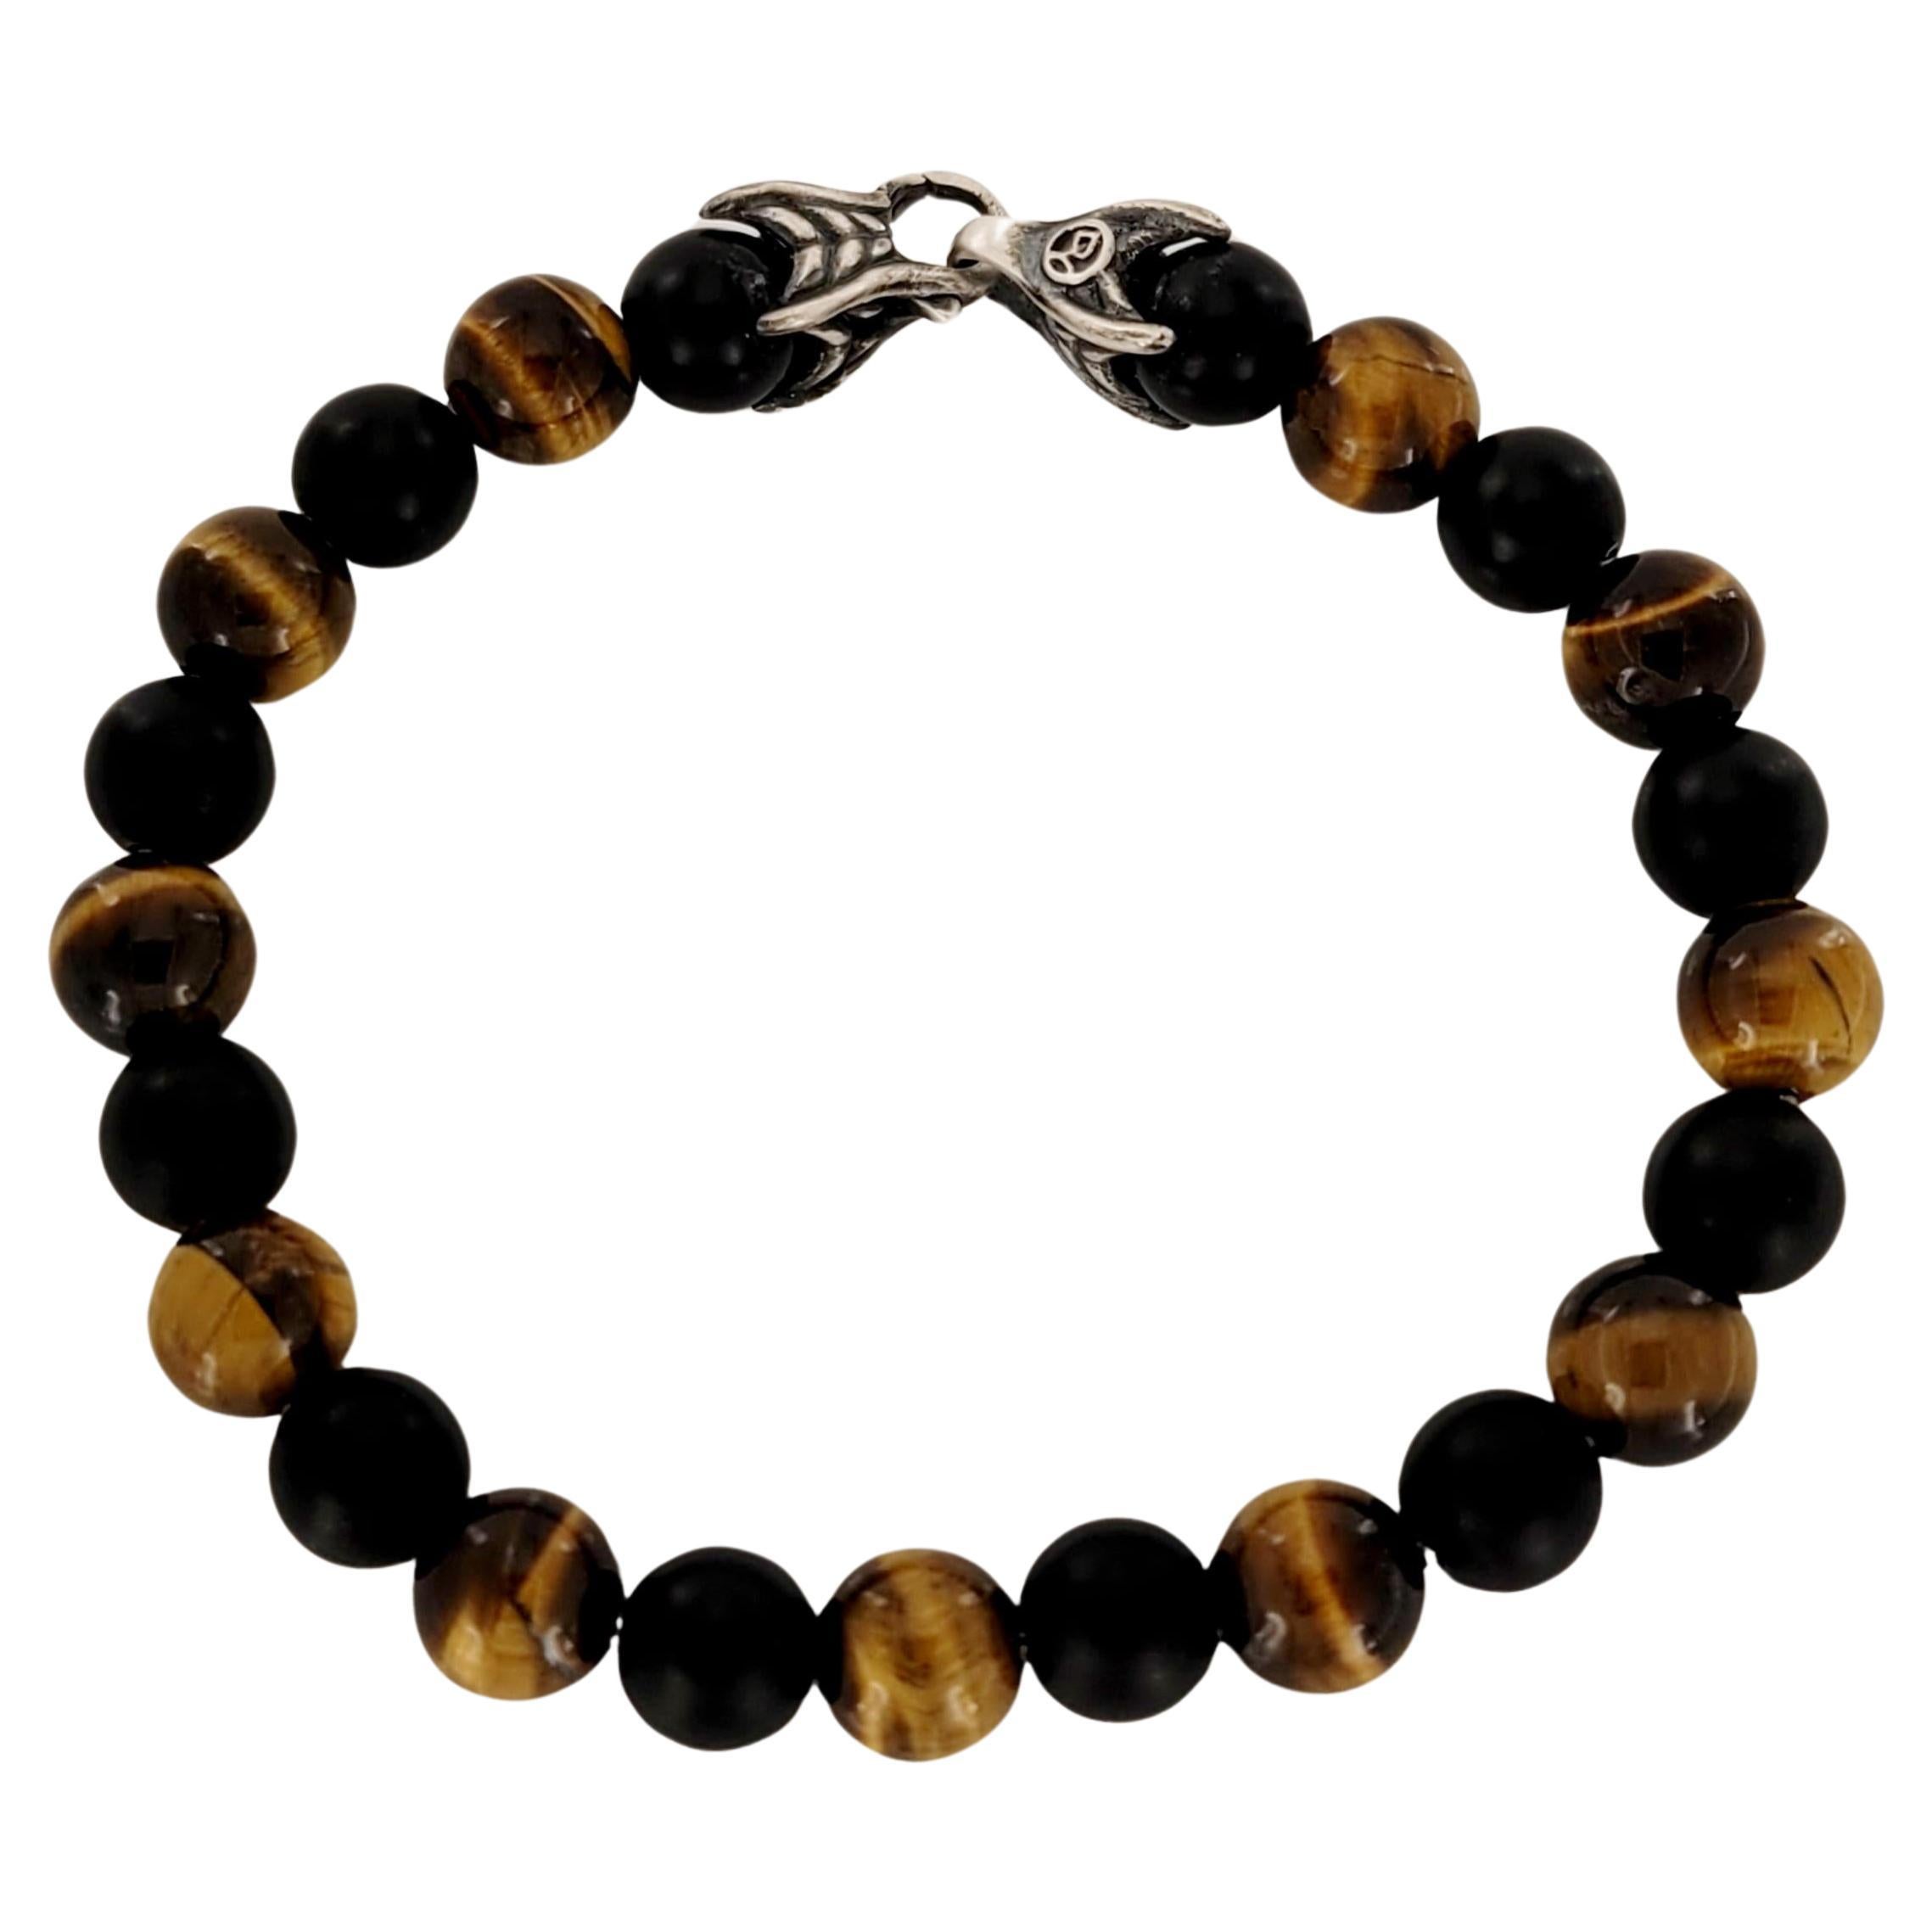 David Yurman Spiritual Beads Bracelet with Black Onyx and Tigers Eye (Bracelet de perles spirituelles avec onyx noir et œil de tigre)